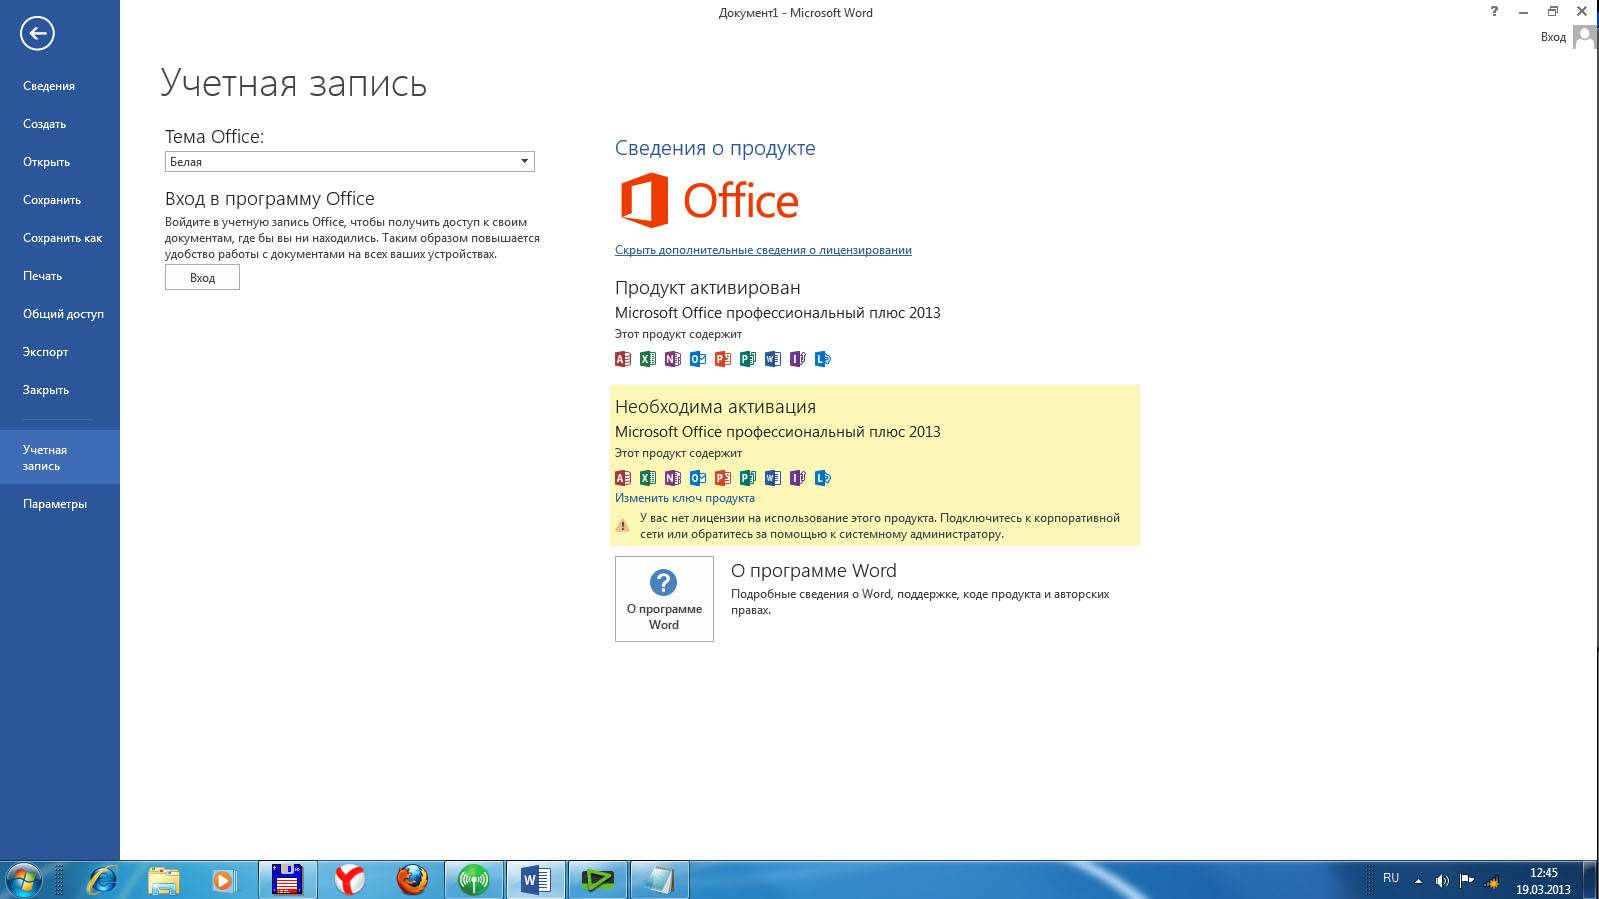 Office ключик активации. Ключ код для Майкрософт офис. Office 2013 ключик активации. Активация Майкрософт. Microsoft ключик активации.